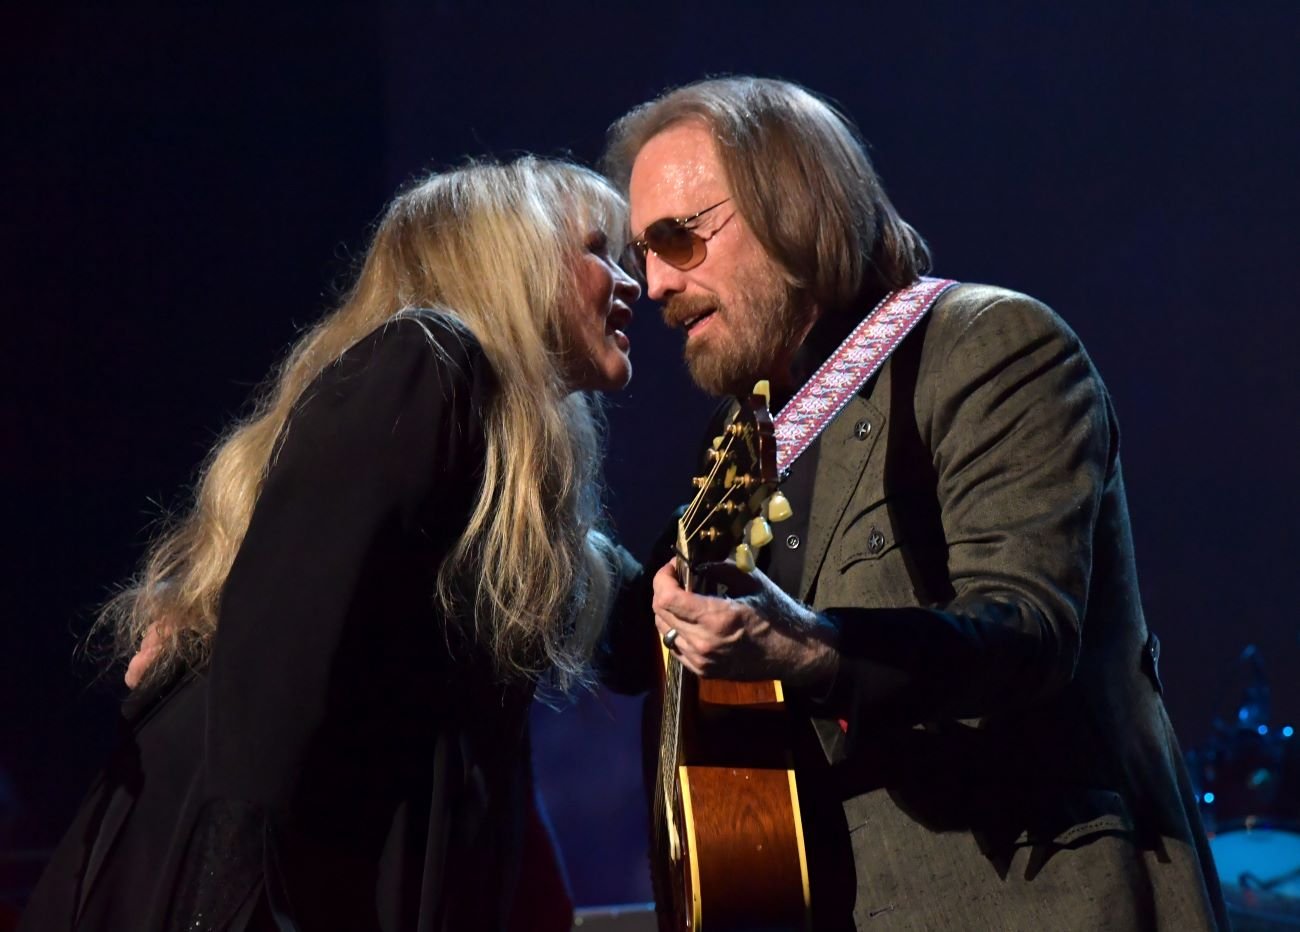 Stevie Nicks talks into Tom Petty's ear. He holds a guitar and wears sunglasses.